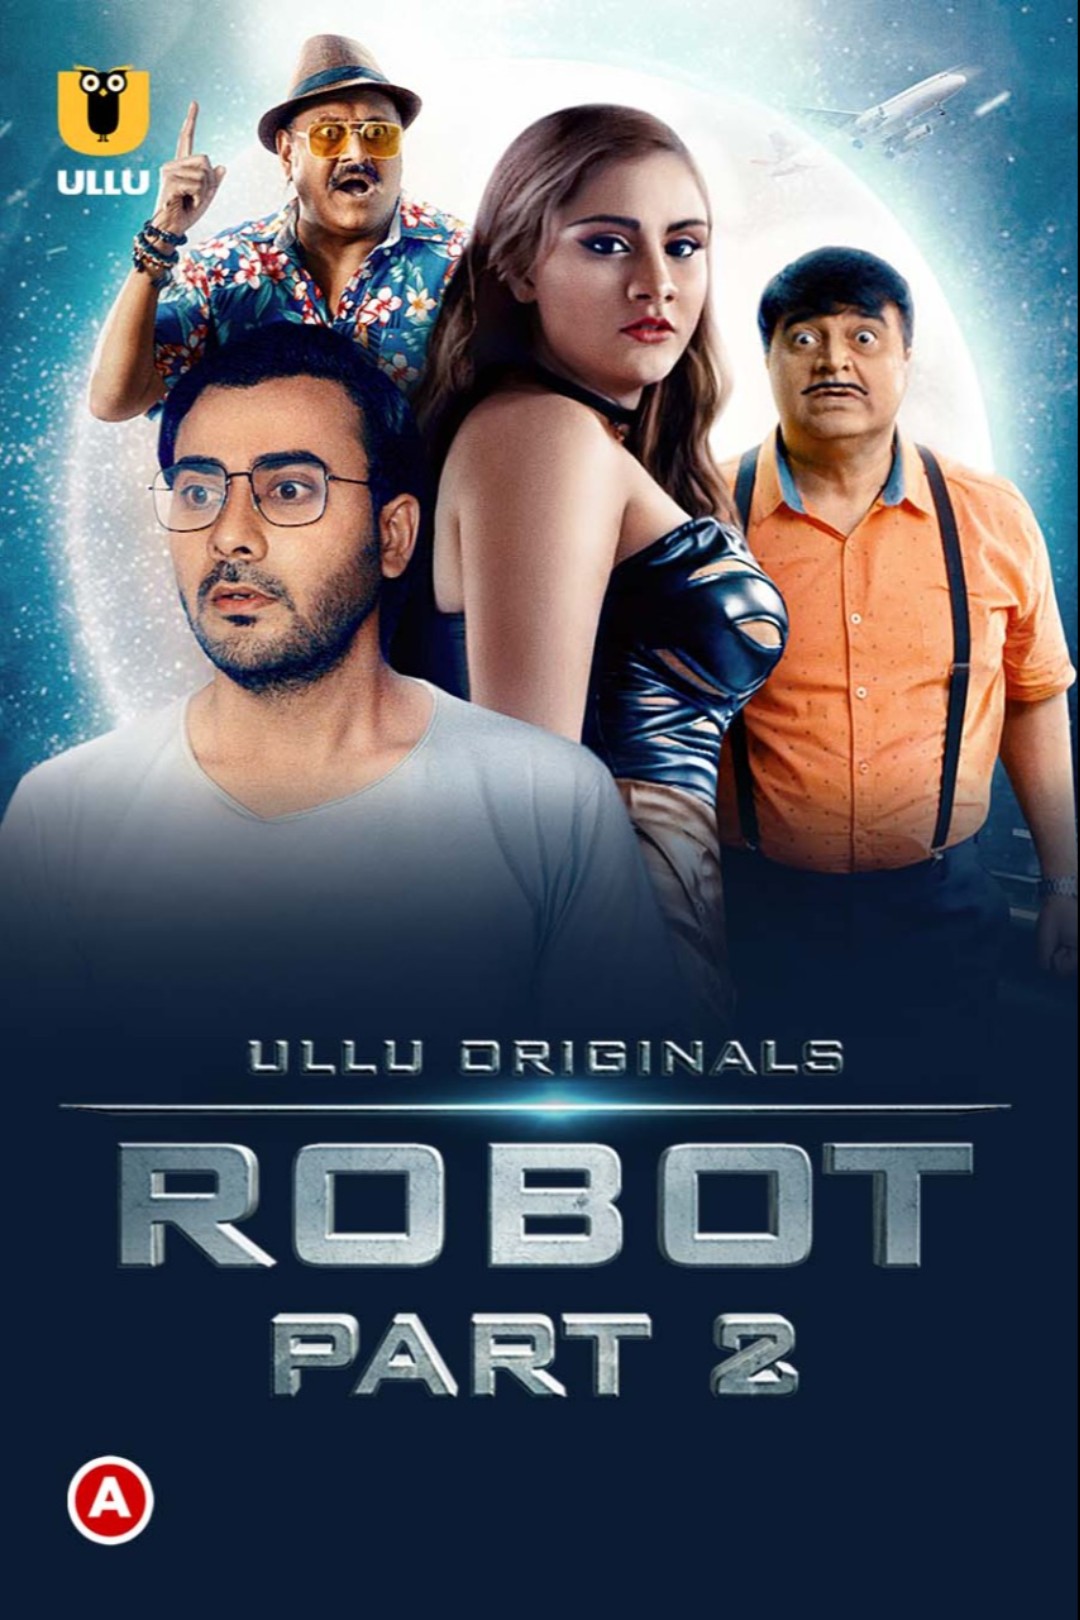 18+Robot (Part 2) 2021 S01 Hindi Ullu Originals Complete Web Series 720p HDRip 570MB Download